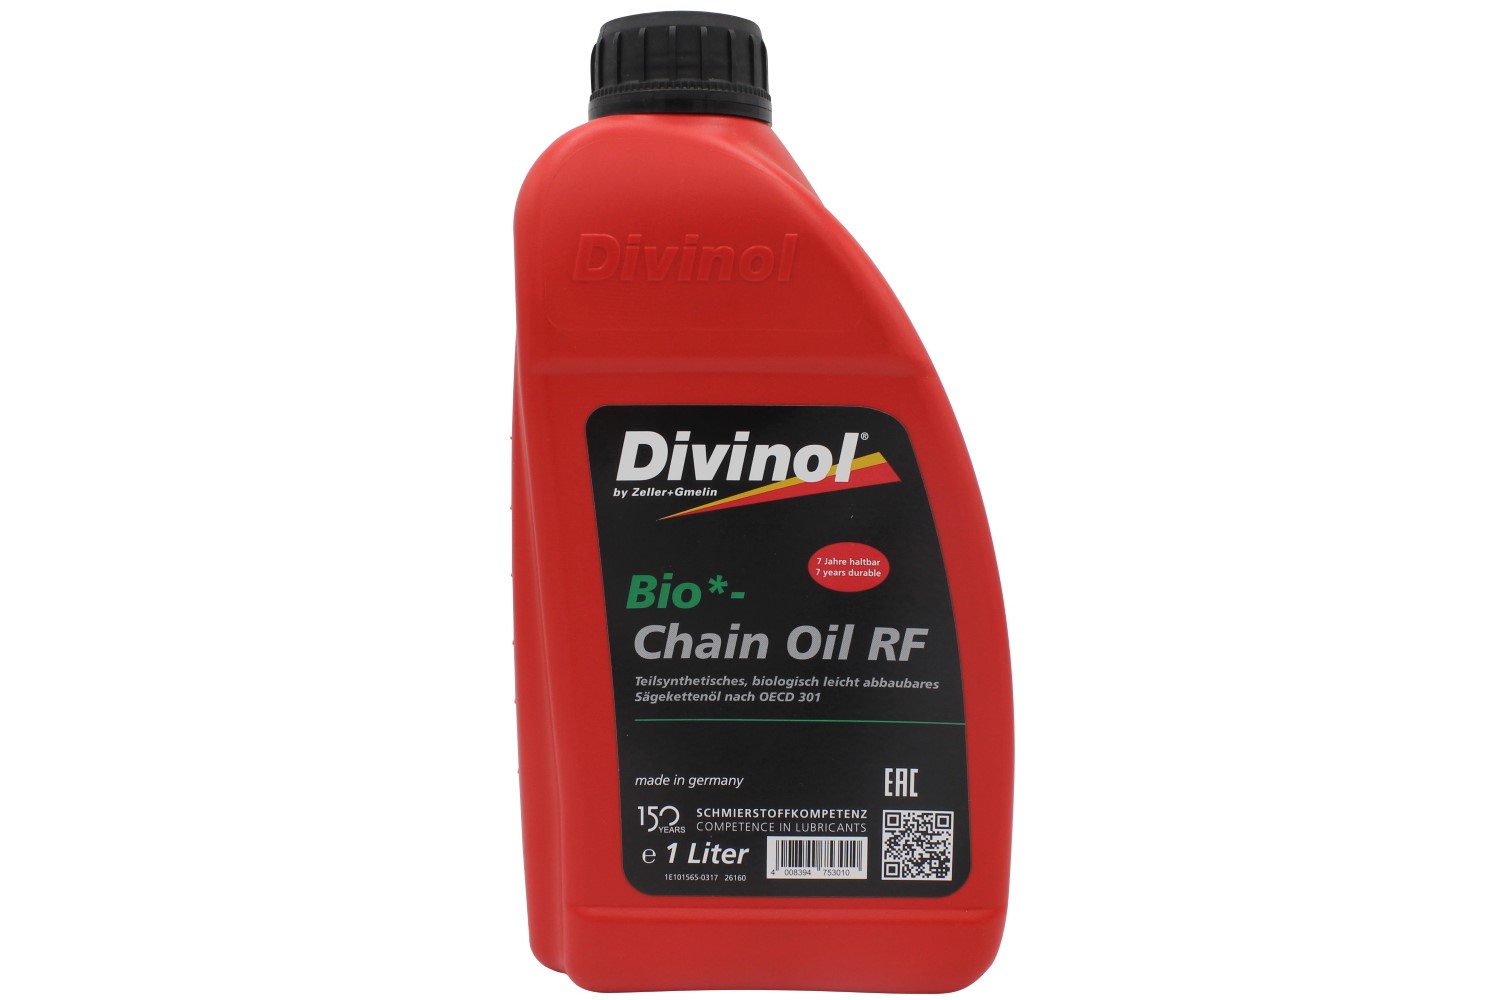 Bio* Kettenöl RF | 1 Liter | Divinol Bio* Chain Oil RF